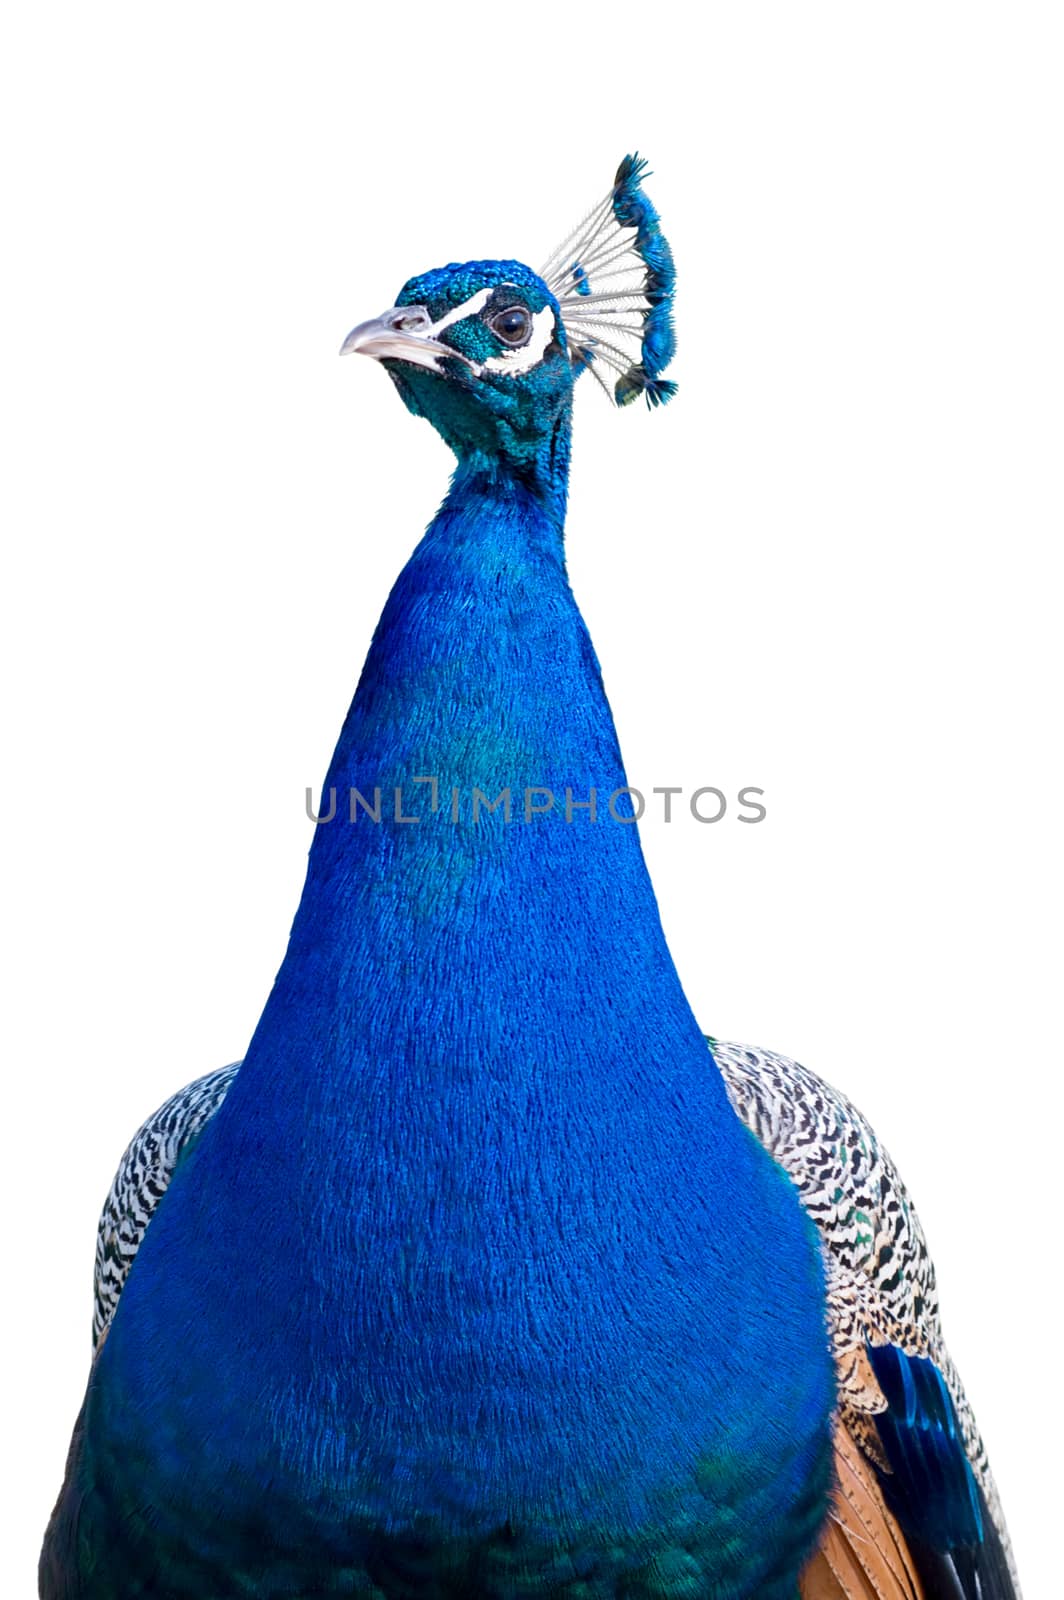 Peacock closeup cutout by vkstudio